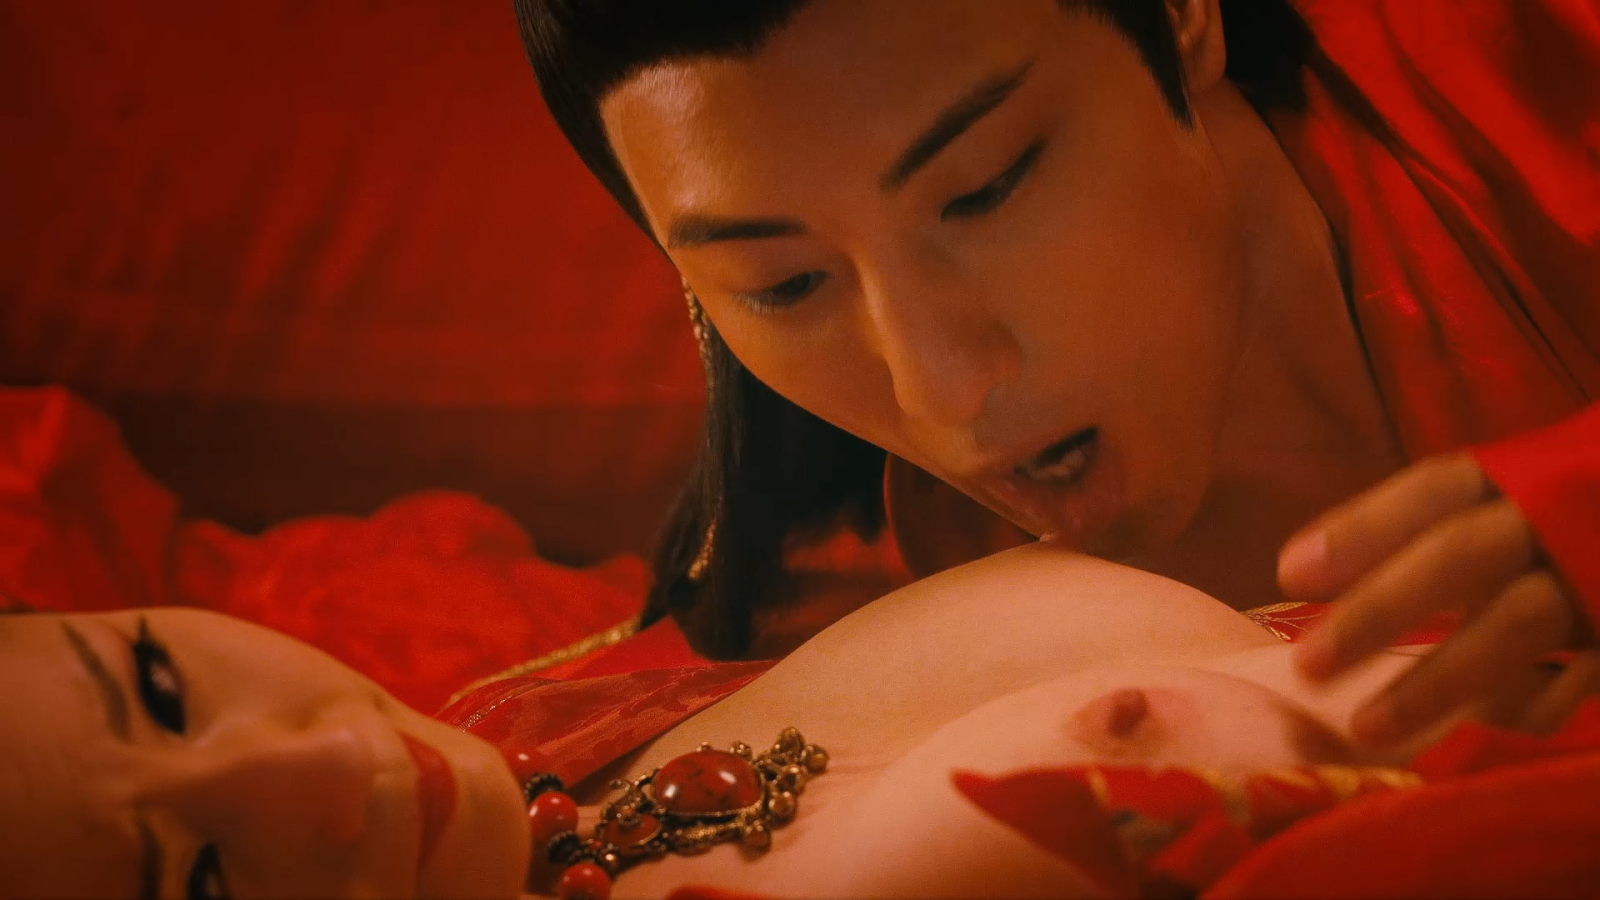 Sex and zen ii cantonese picture streaming online watch